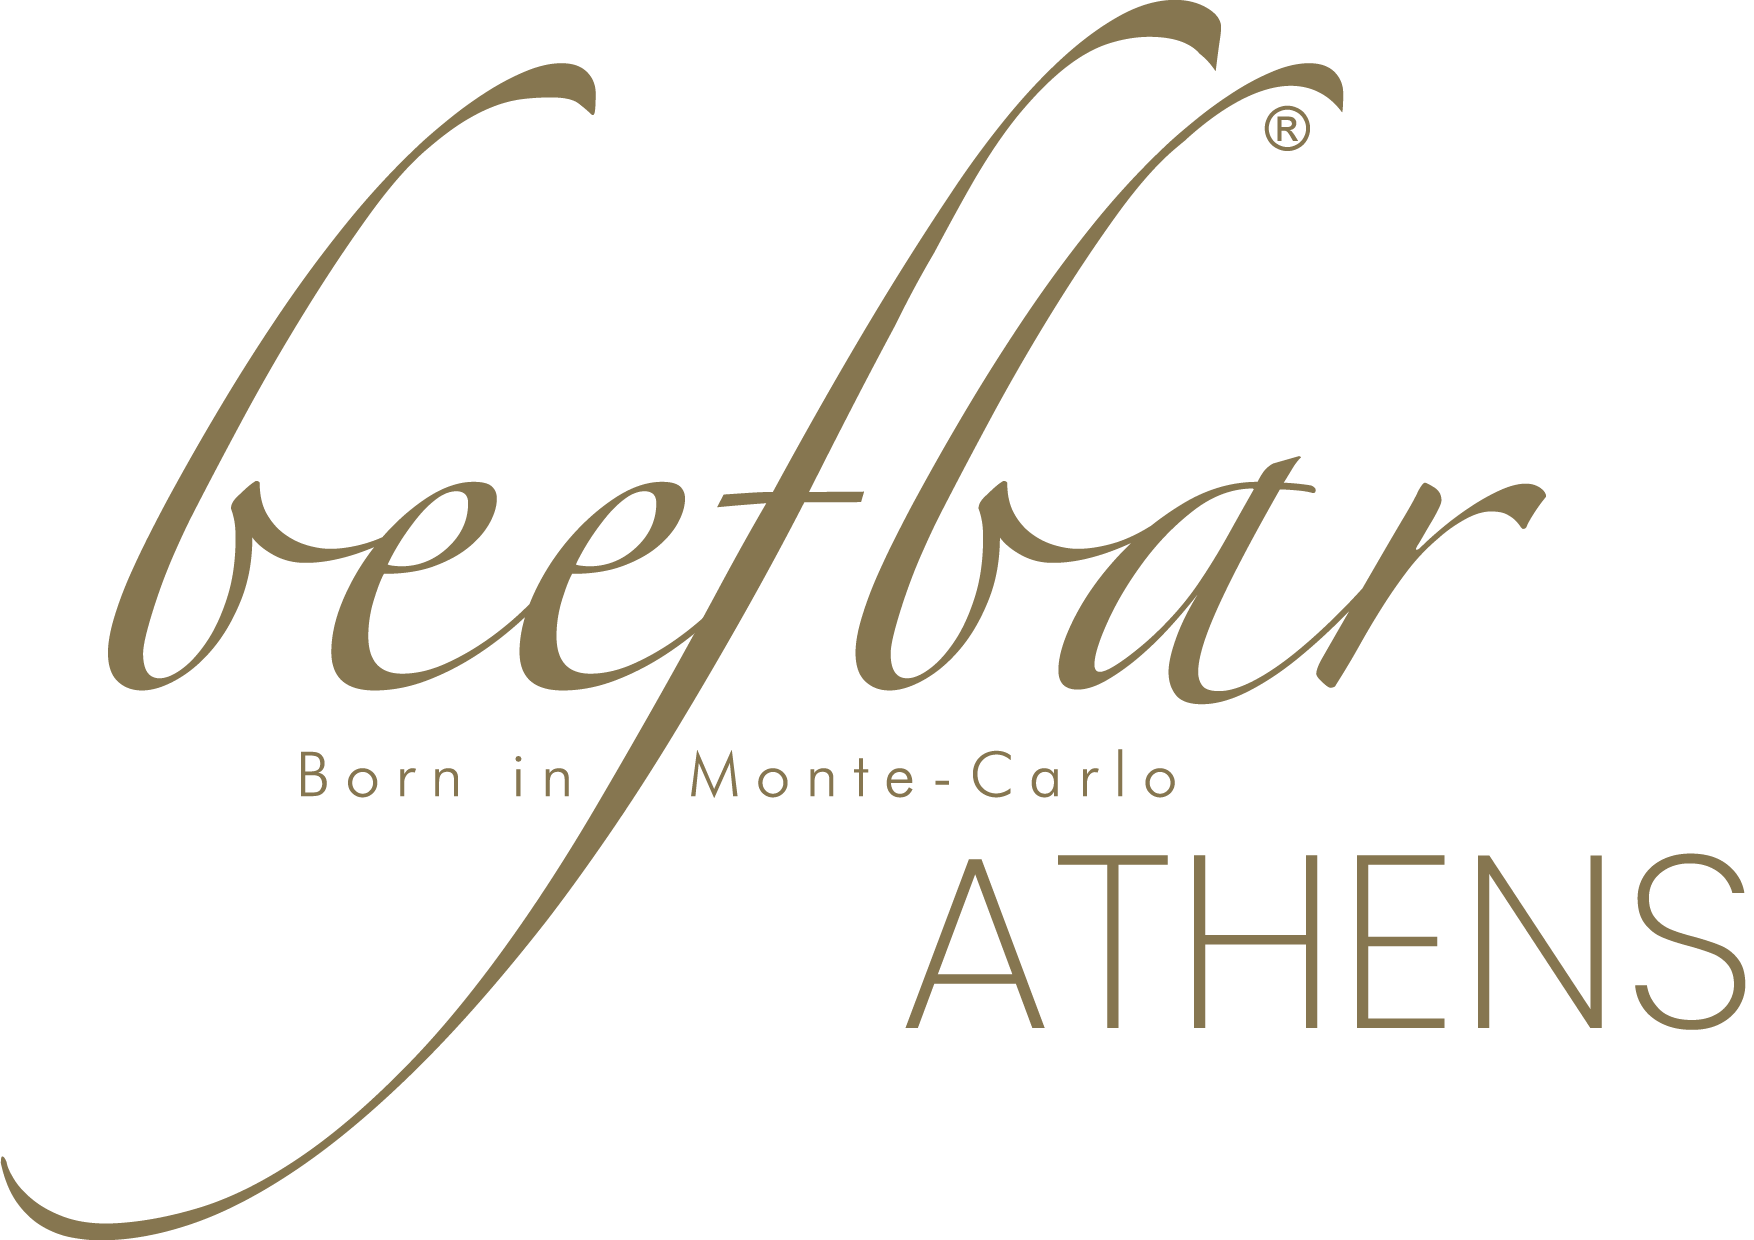 Logo beefbar athens